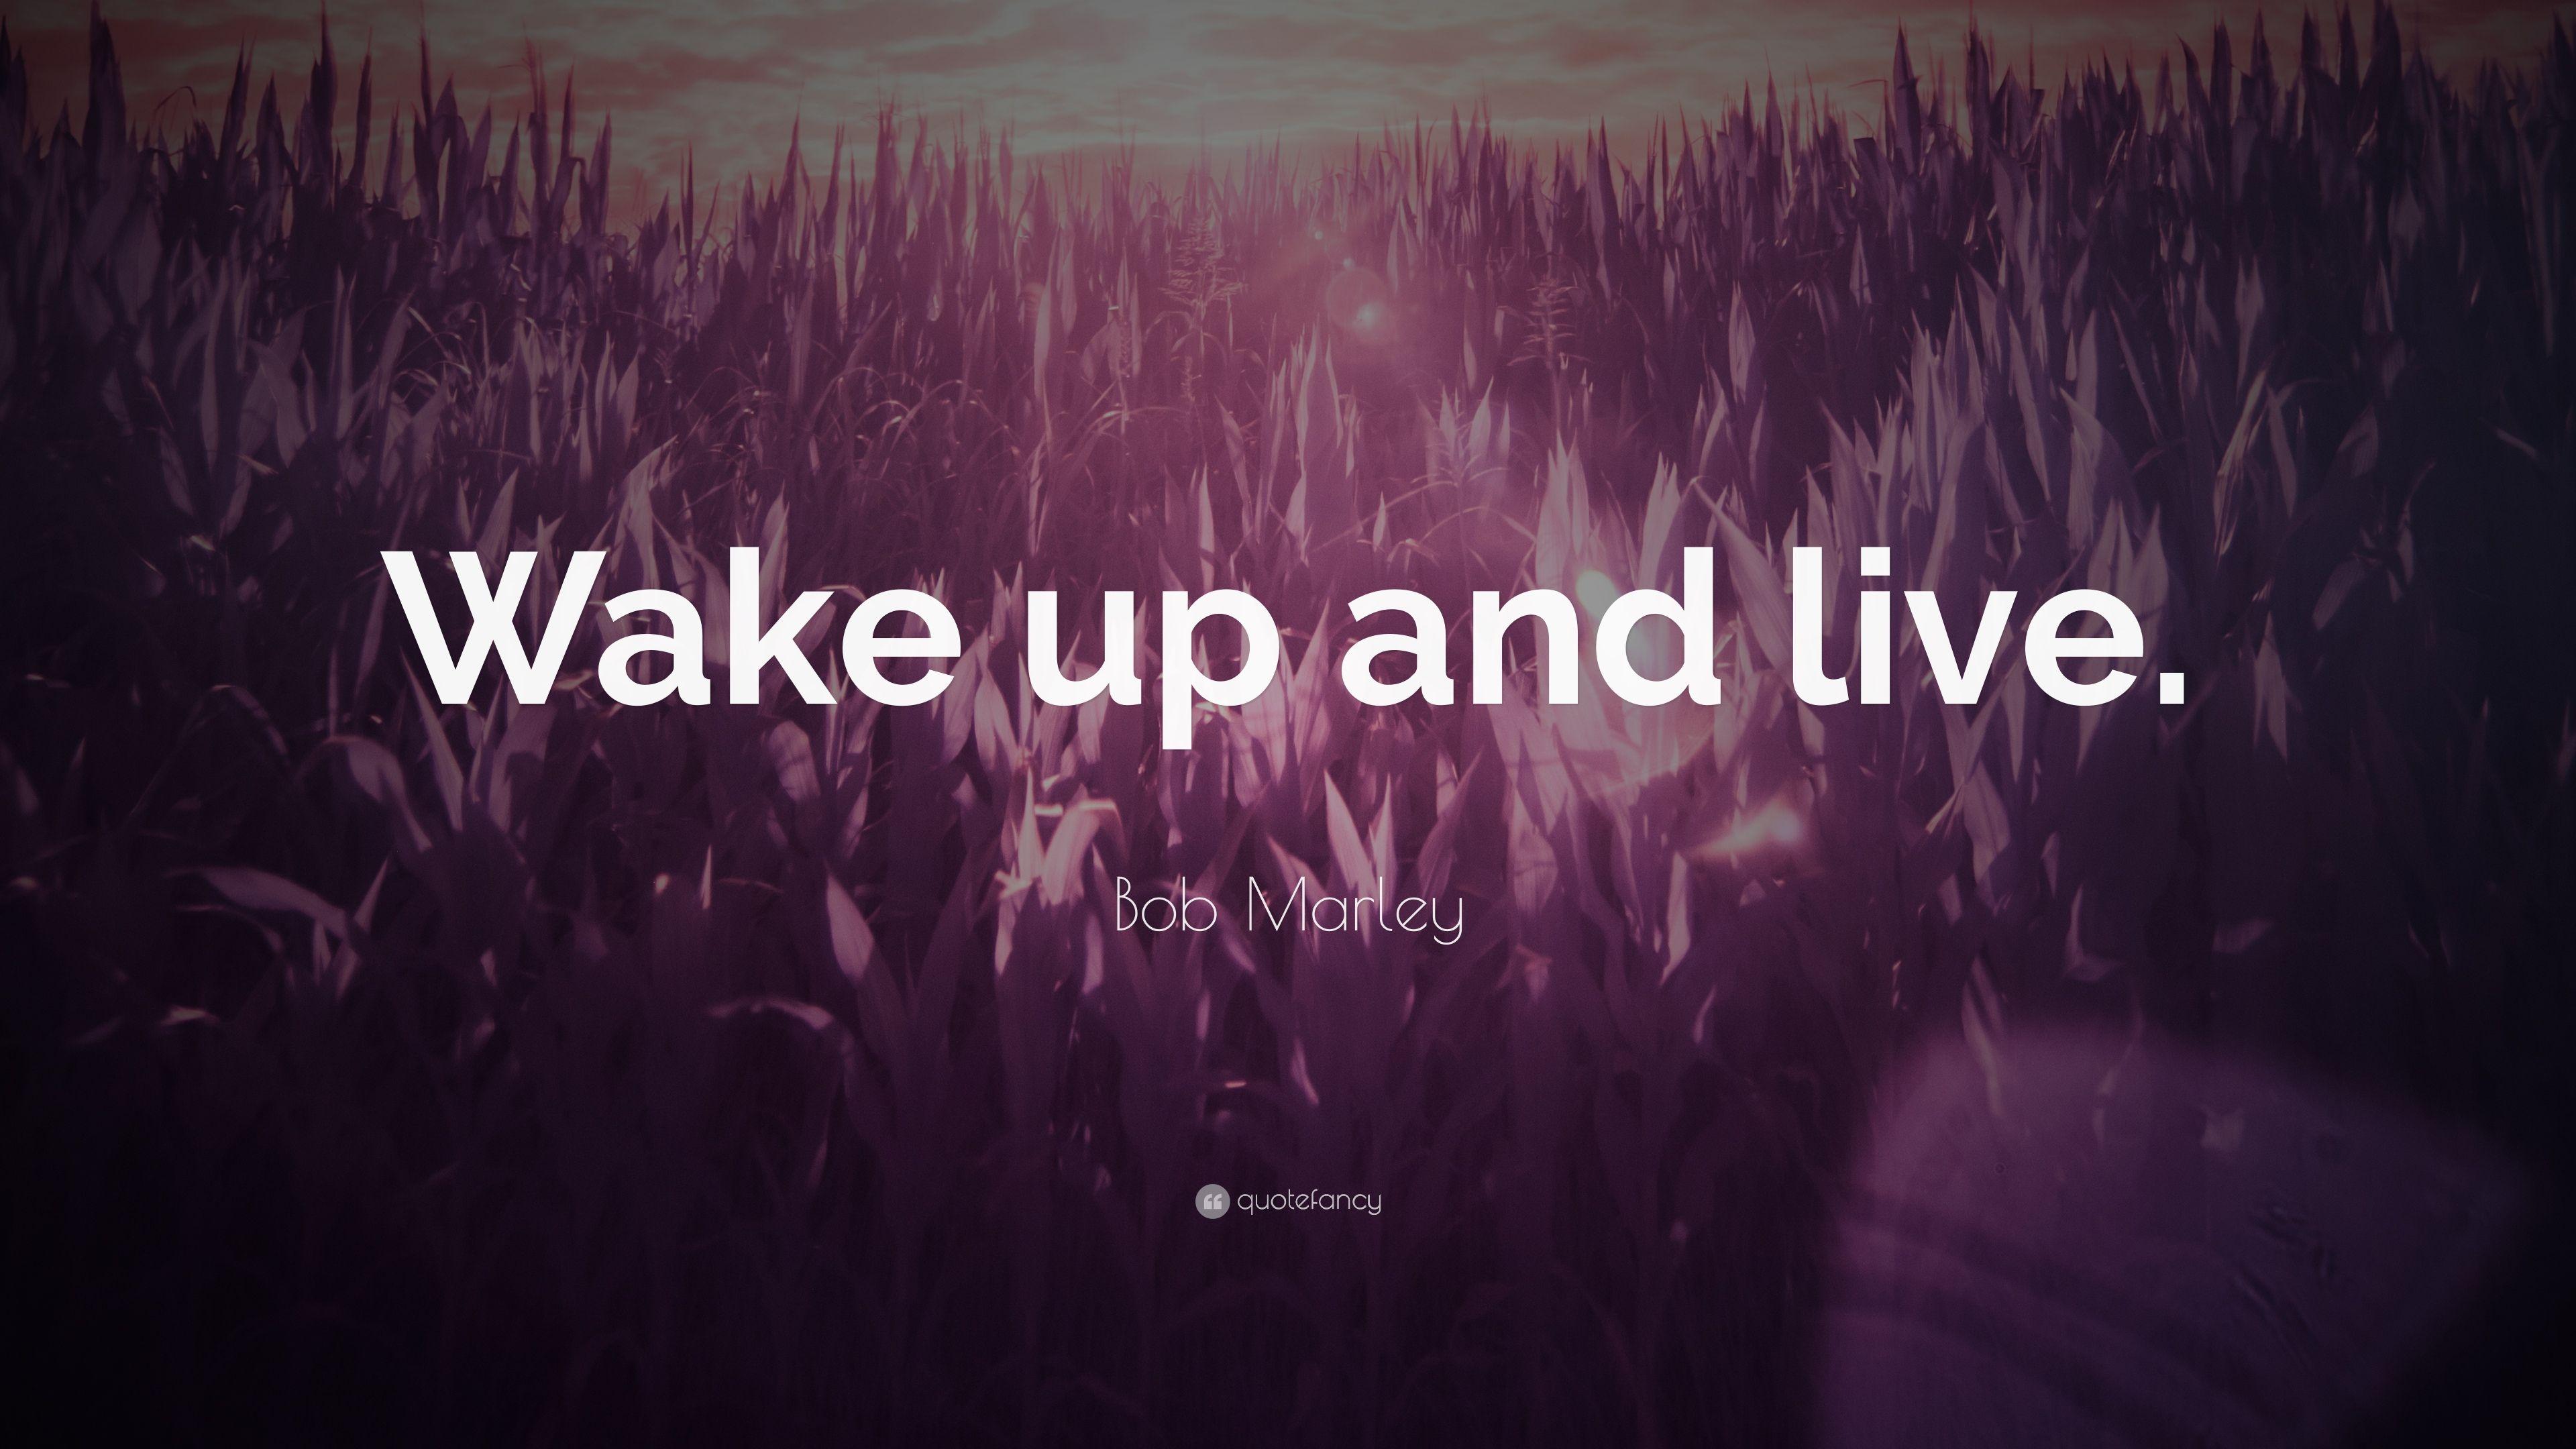 Bob Marley Quote: “Wake up and live.” (23 wallpaper)